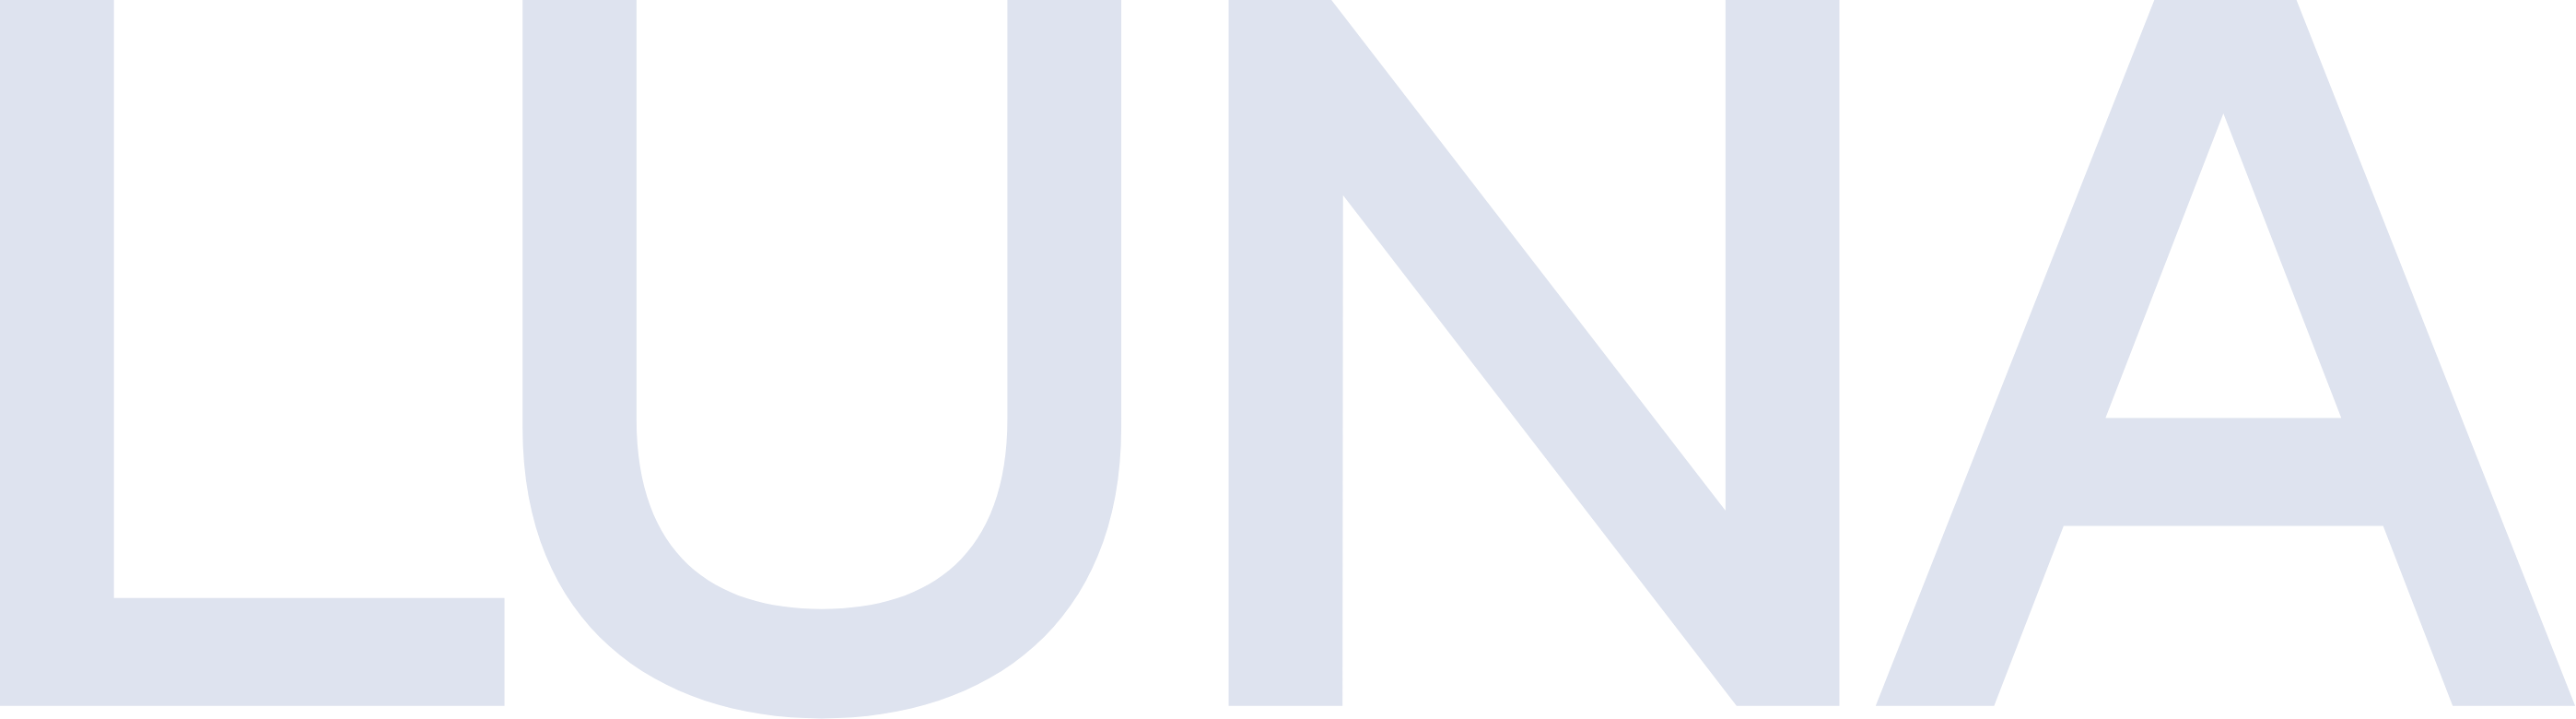 Luna Templates logo